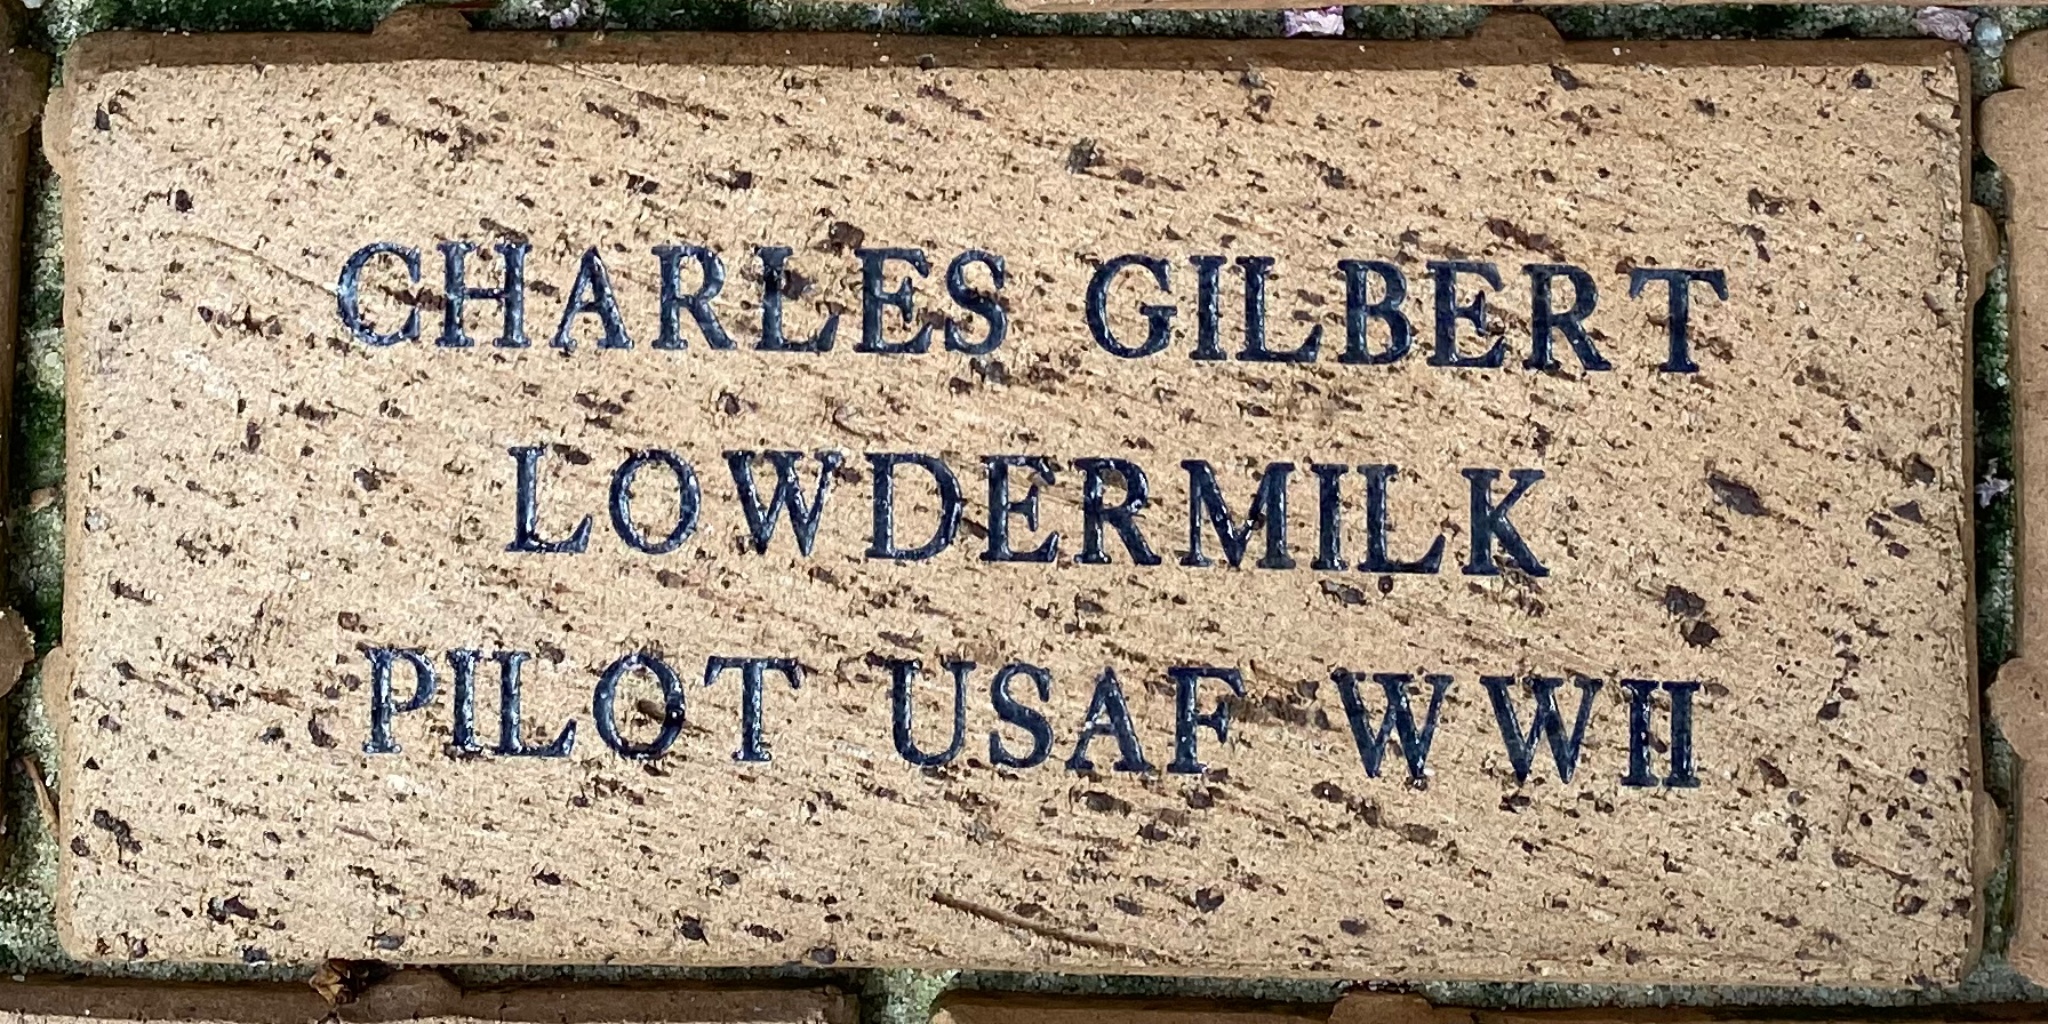 CHARLES GILBERT LOWDERMILK PILOT USAF WWII